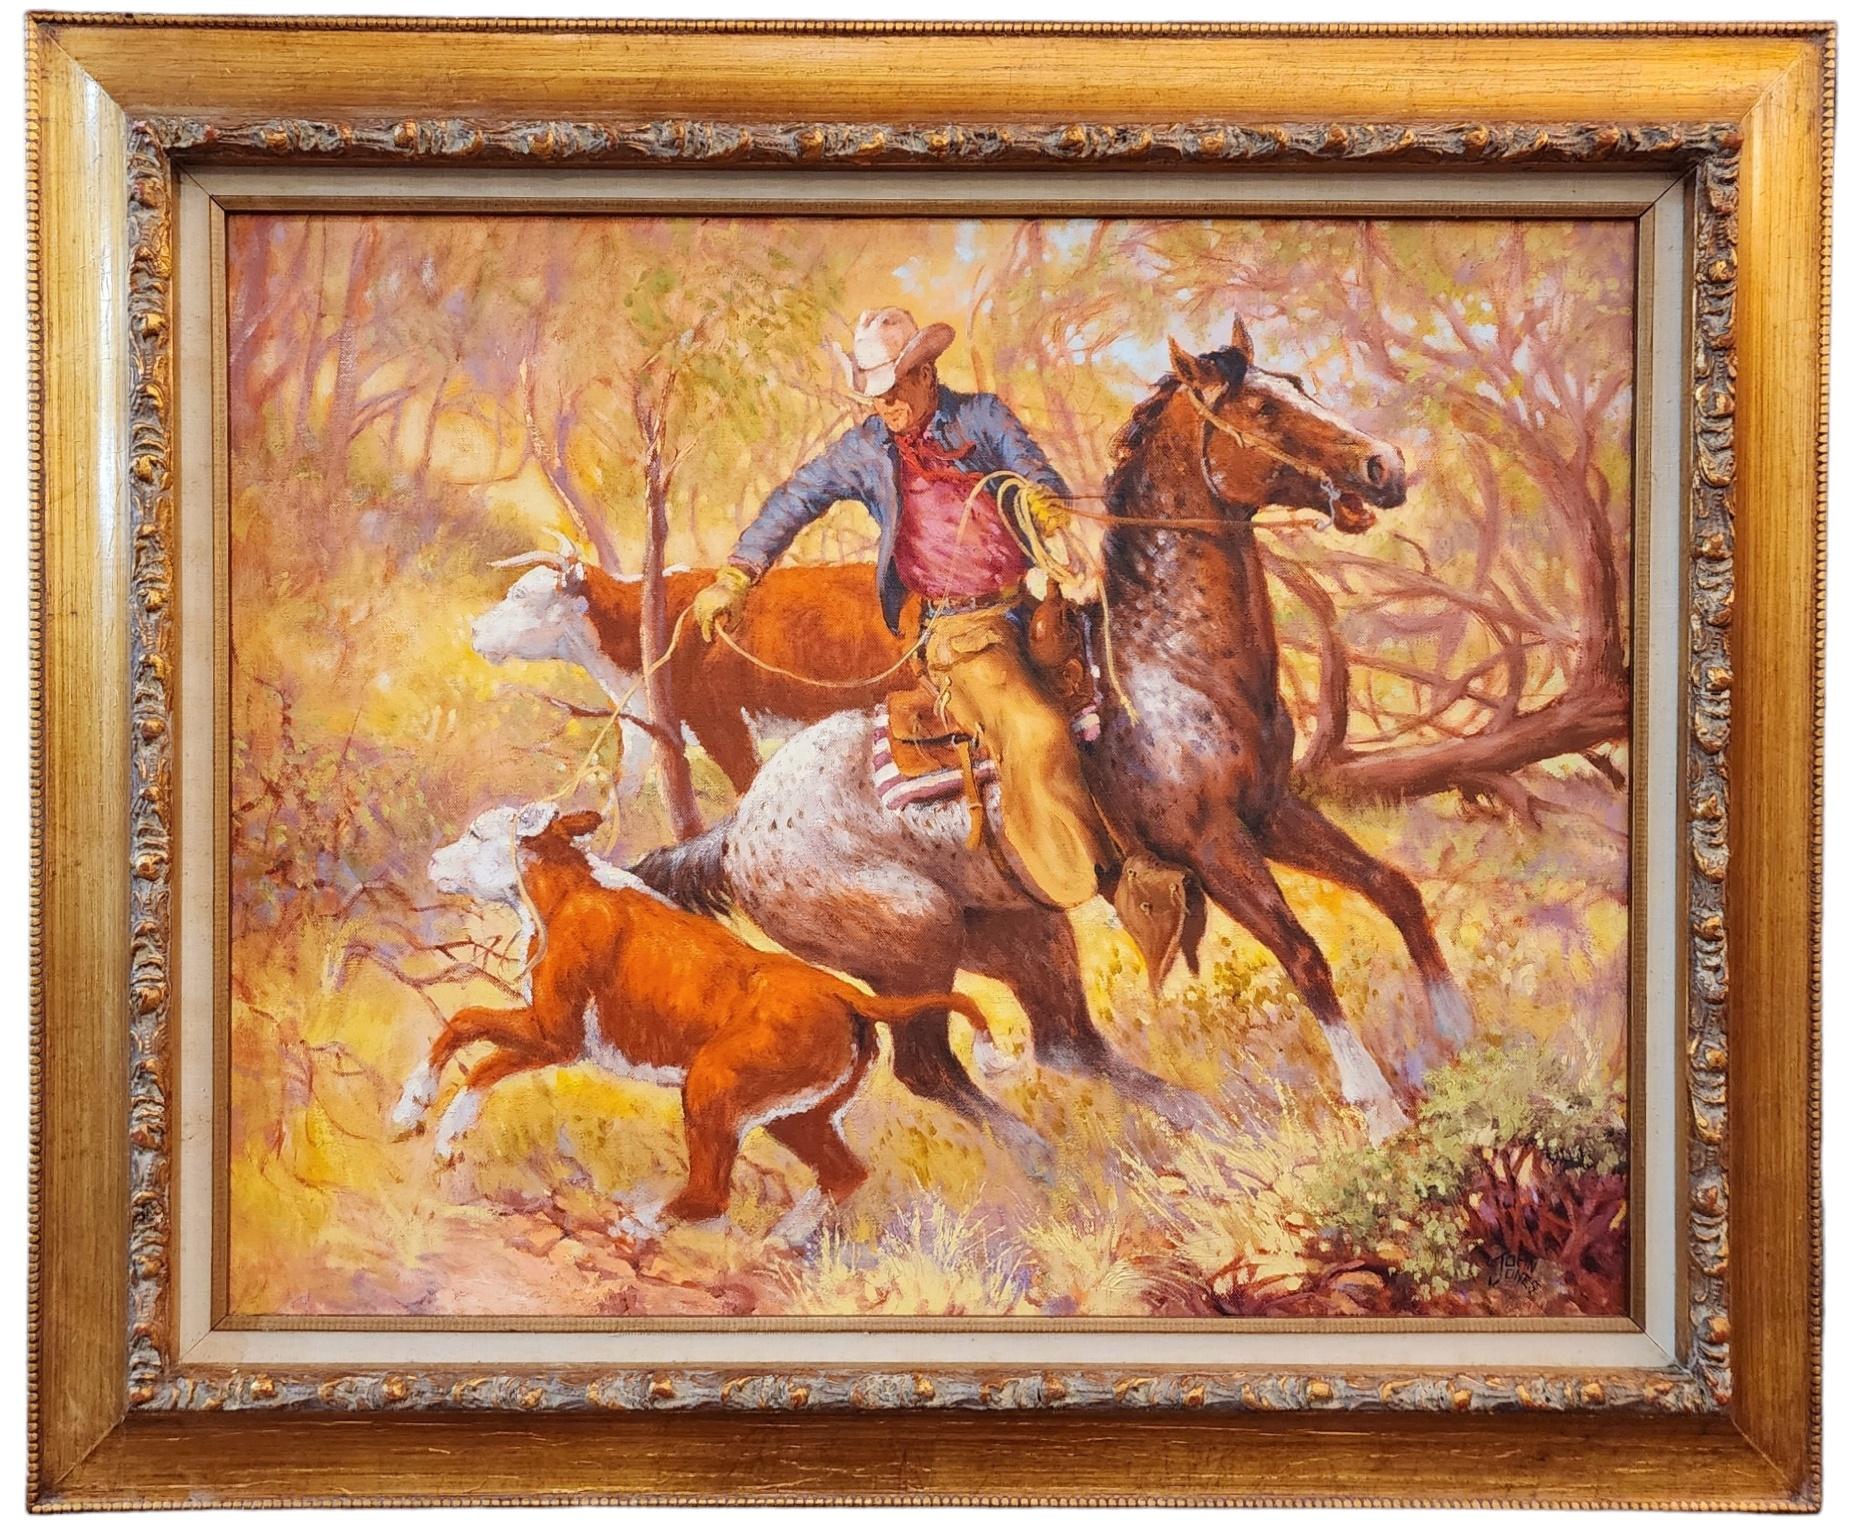 John Jones Animal Painting – The Capture, Cowboy, Herding Cattle, Vintage Western Art, Pferd, Lassoing Cows